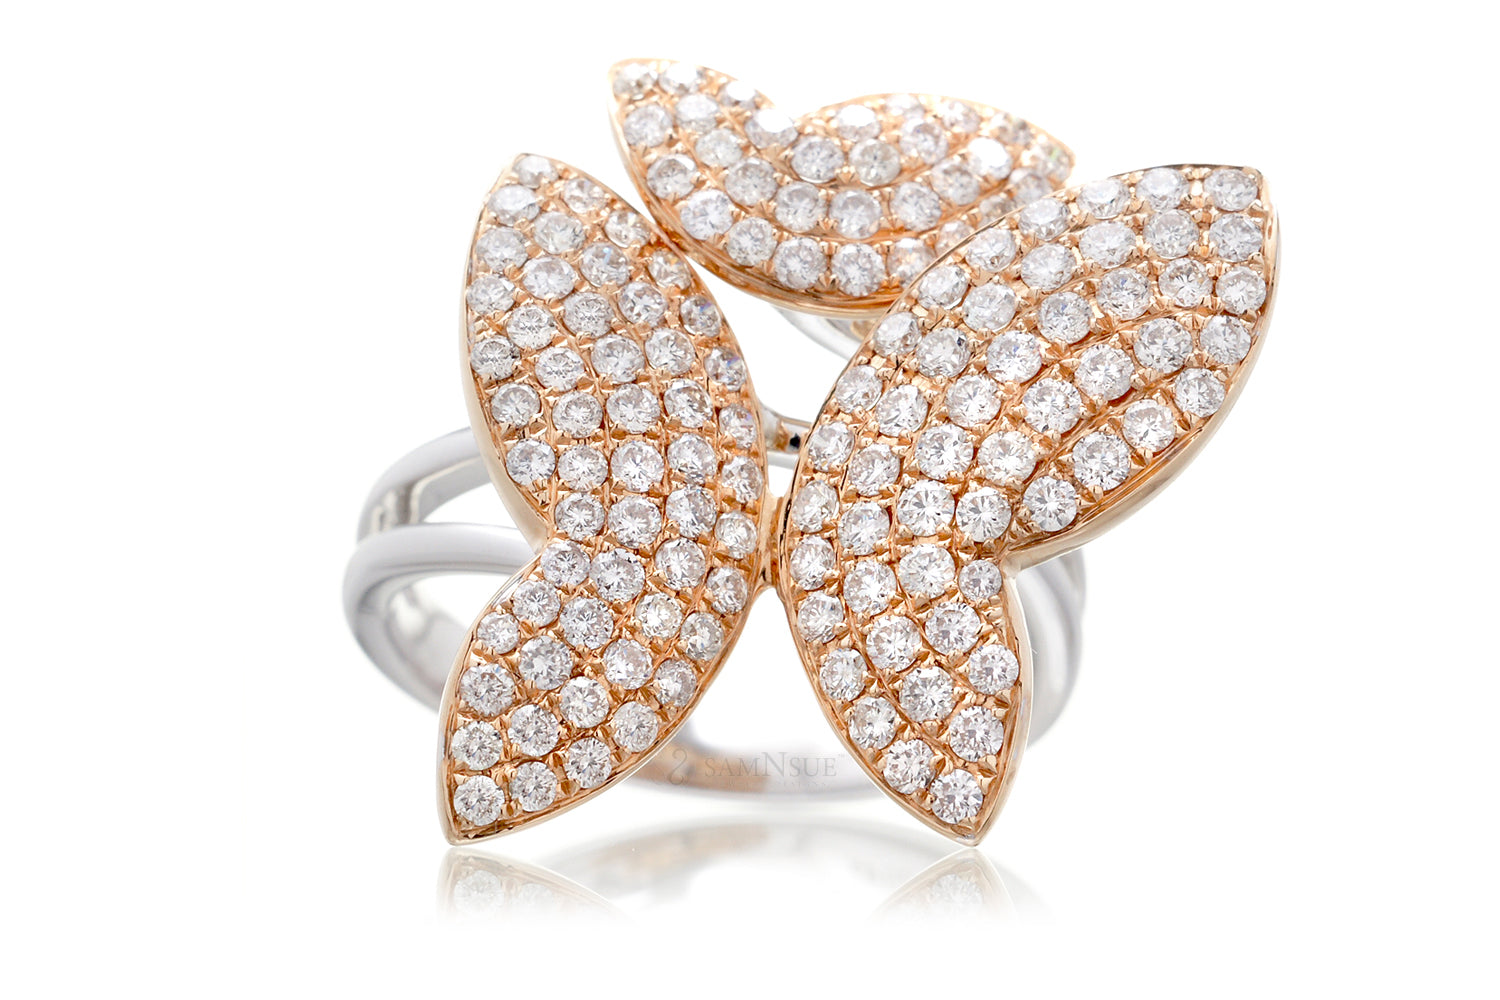 The Pavé Diamond Butterfly Ring